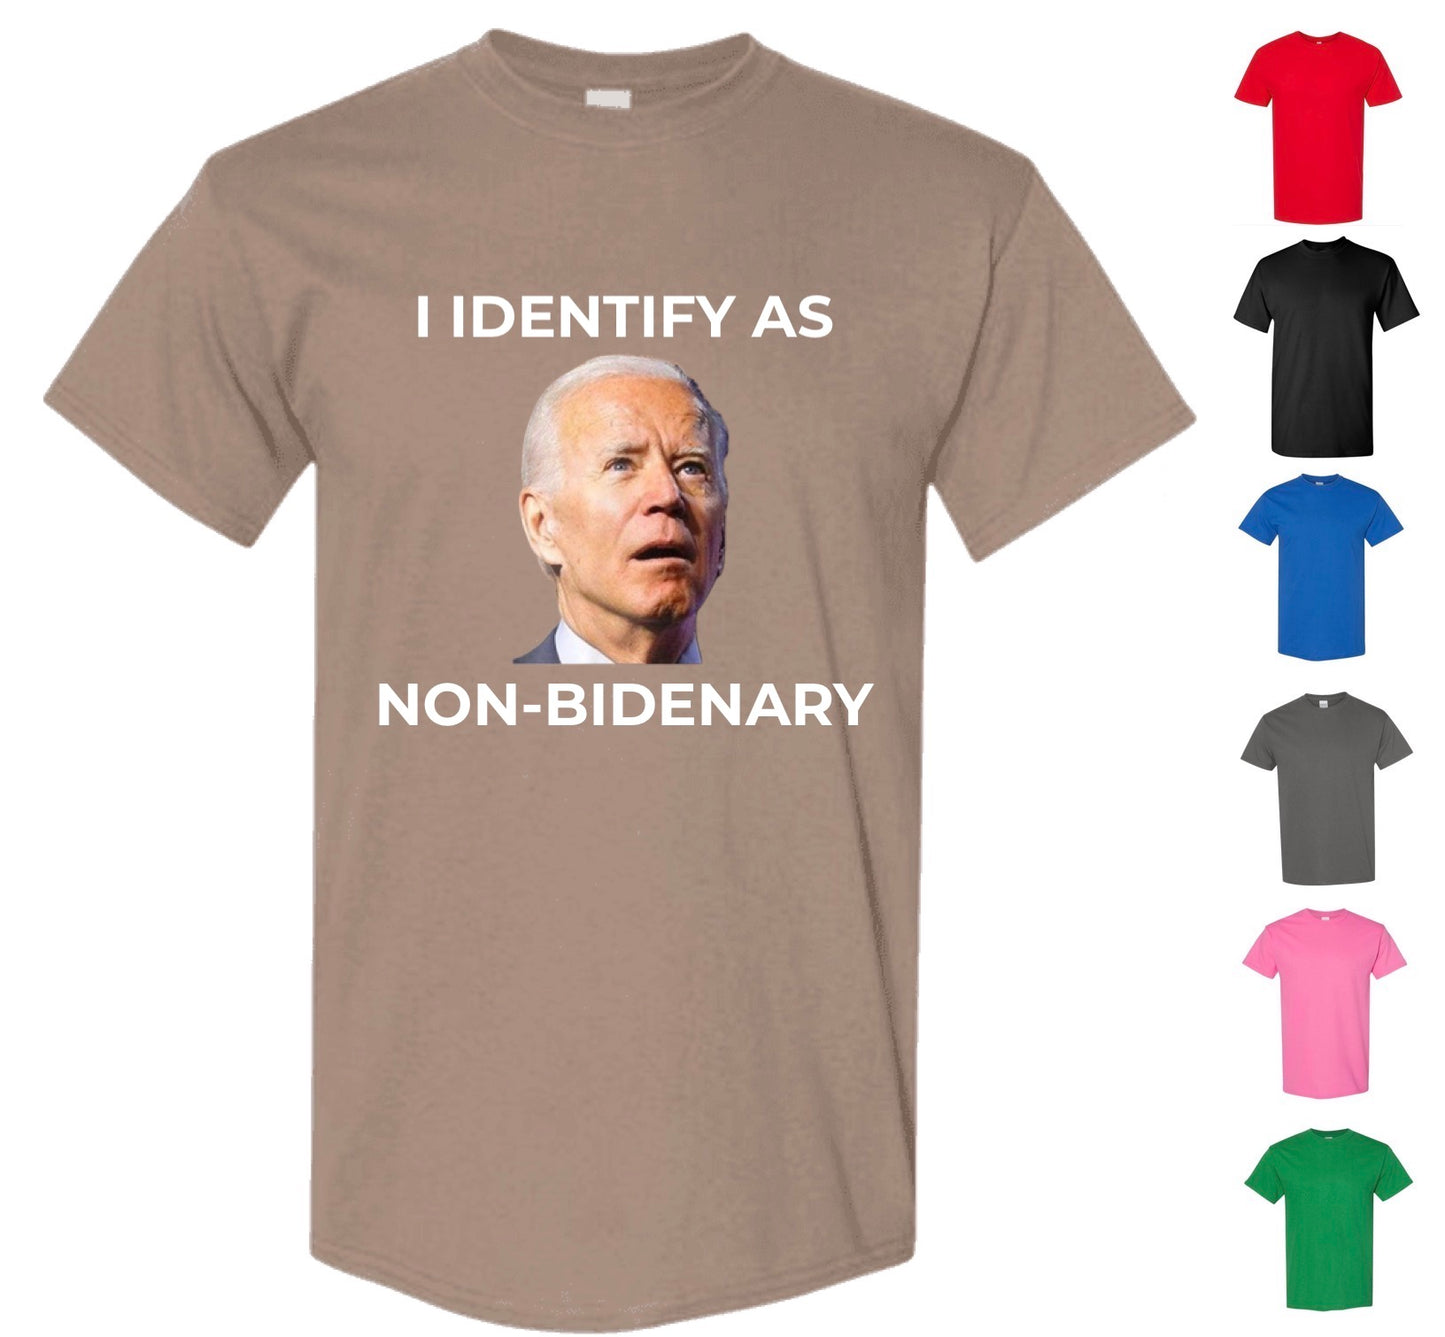 I Identify As Non-Bidenary T-Shirt (FREE Shipping!)